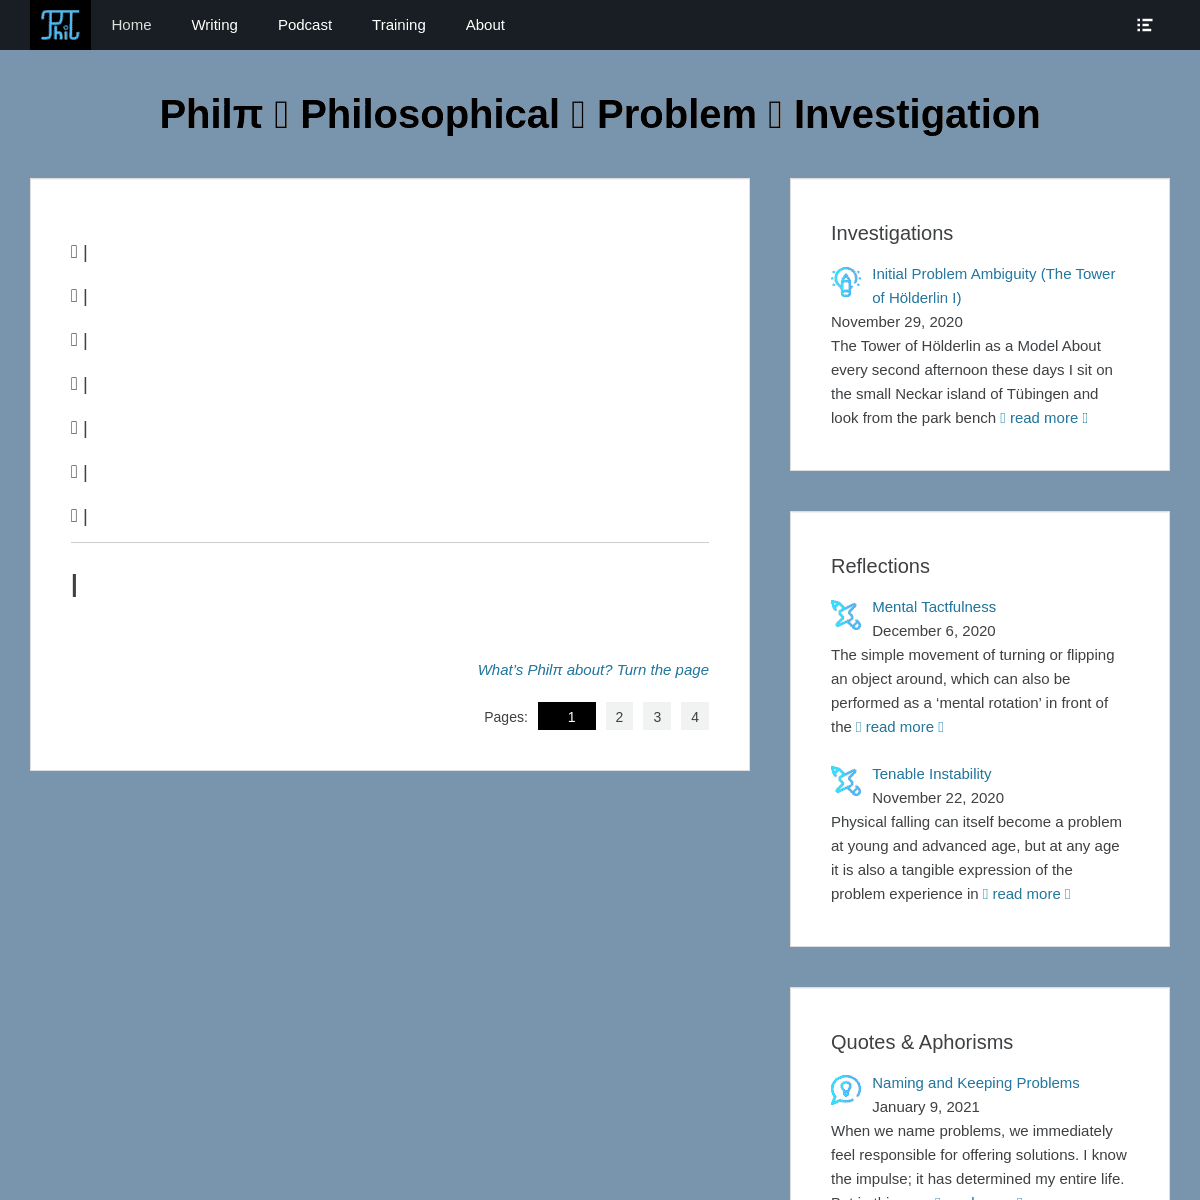 A complete backup of https://philpi.com